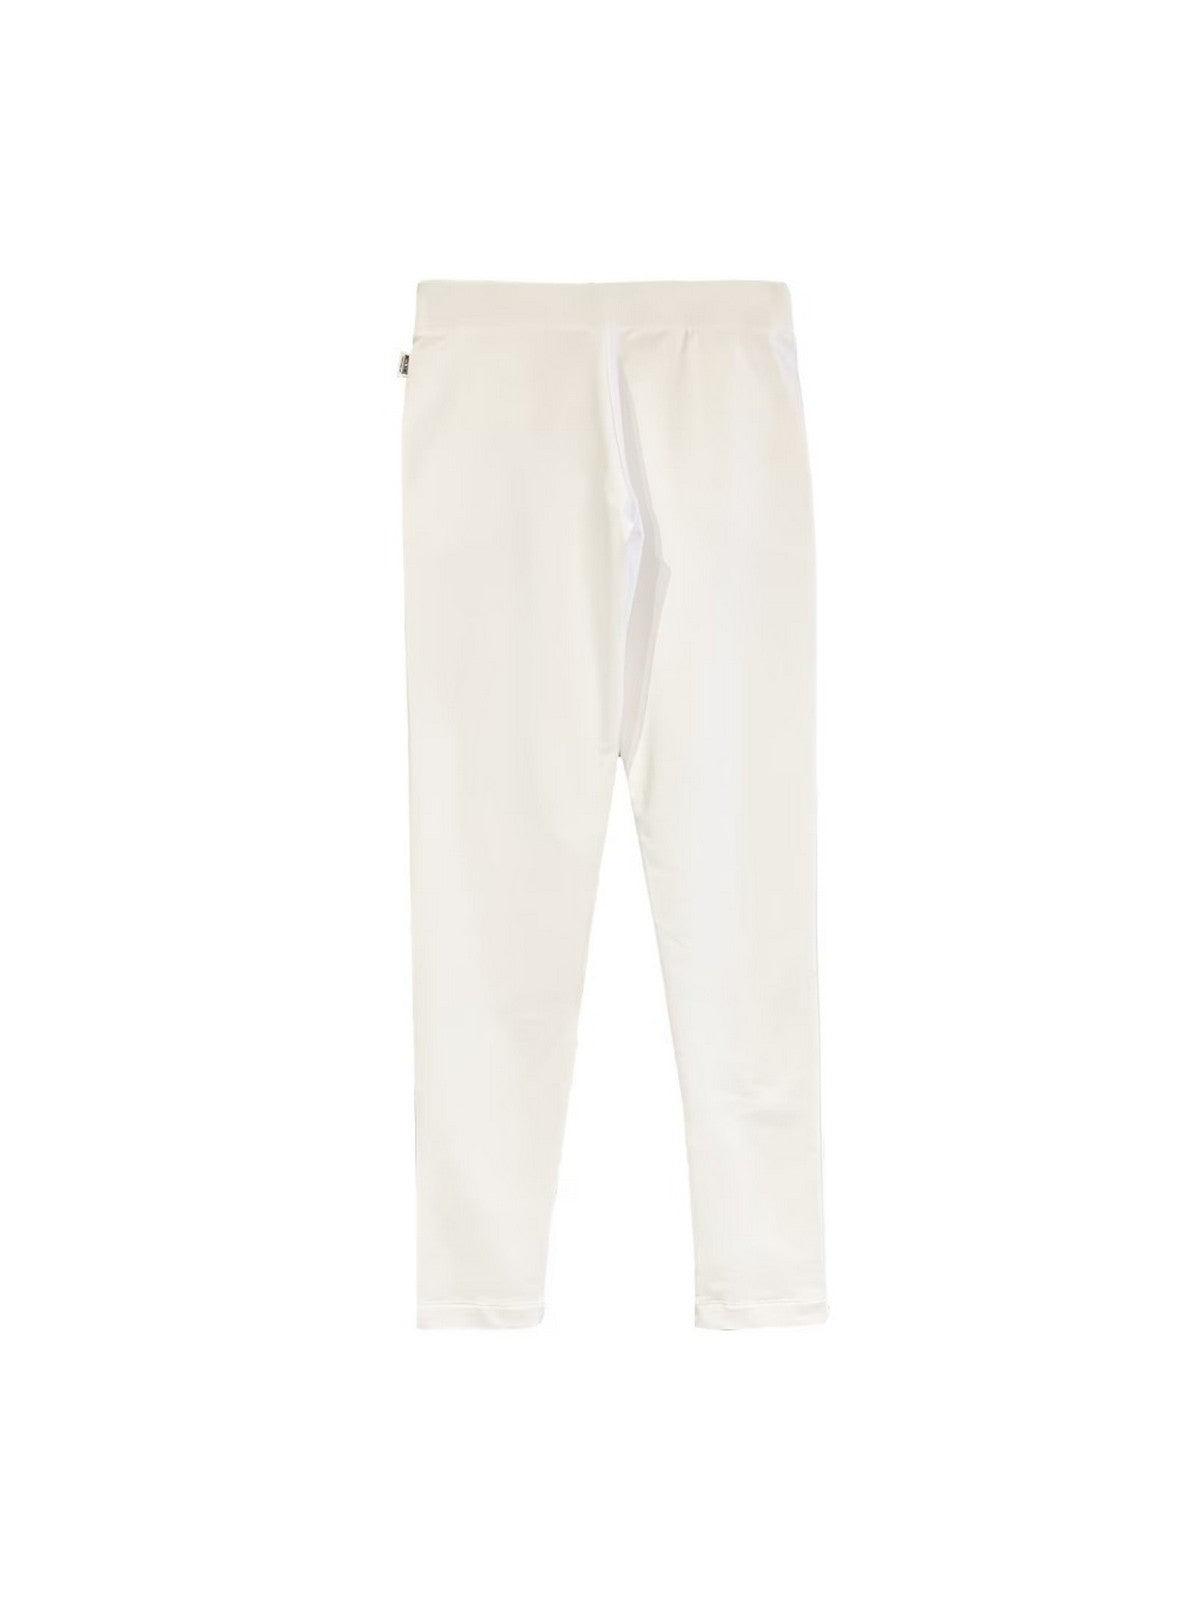 MOSCHINO UNDERWEAR Pantalone Donna  4329 9002 Bianco